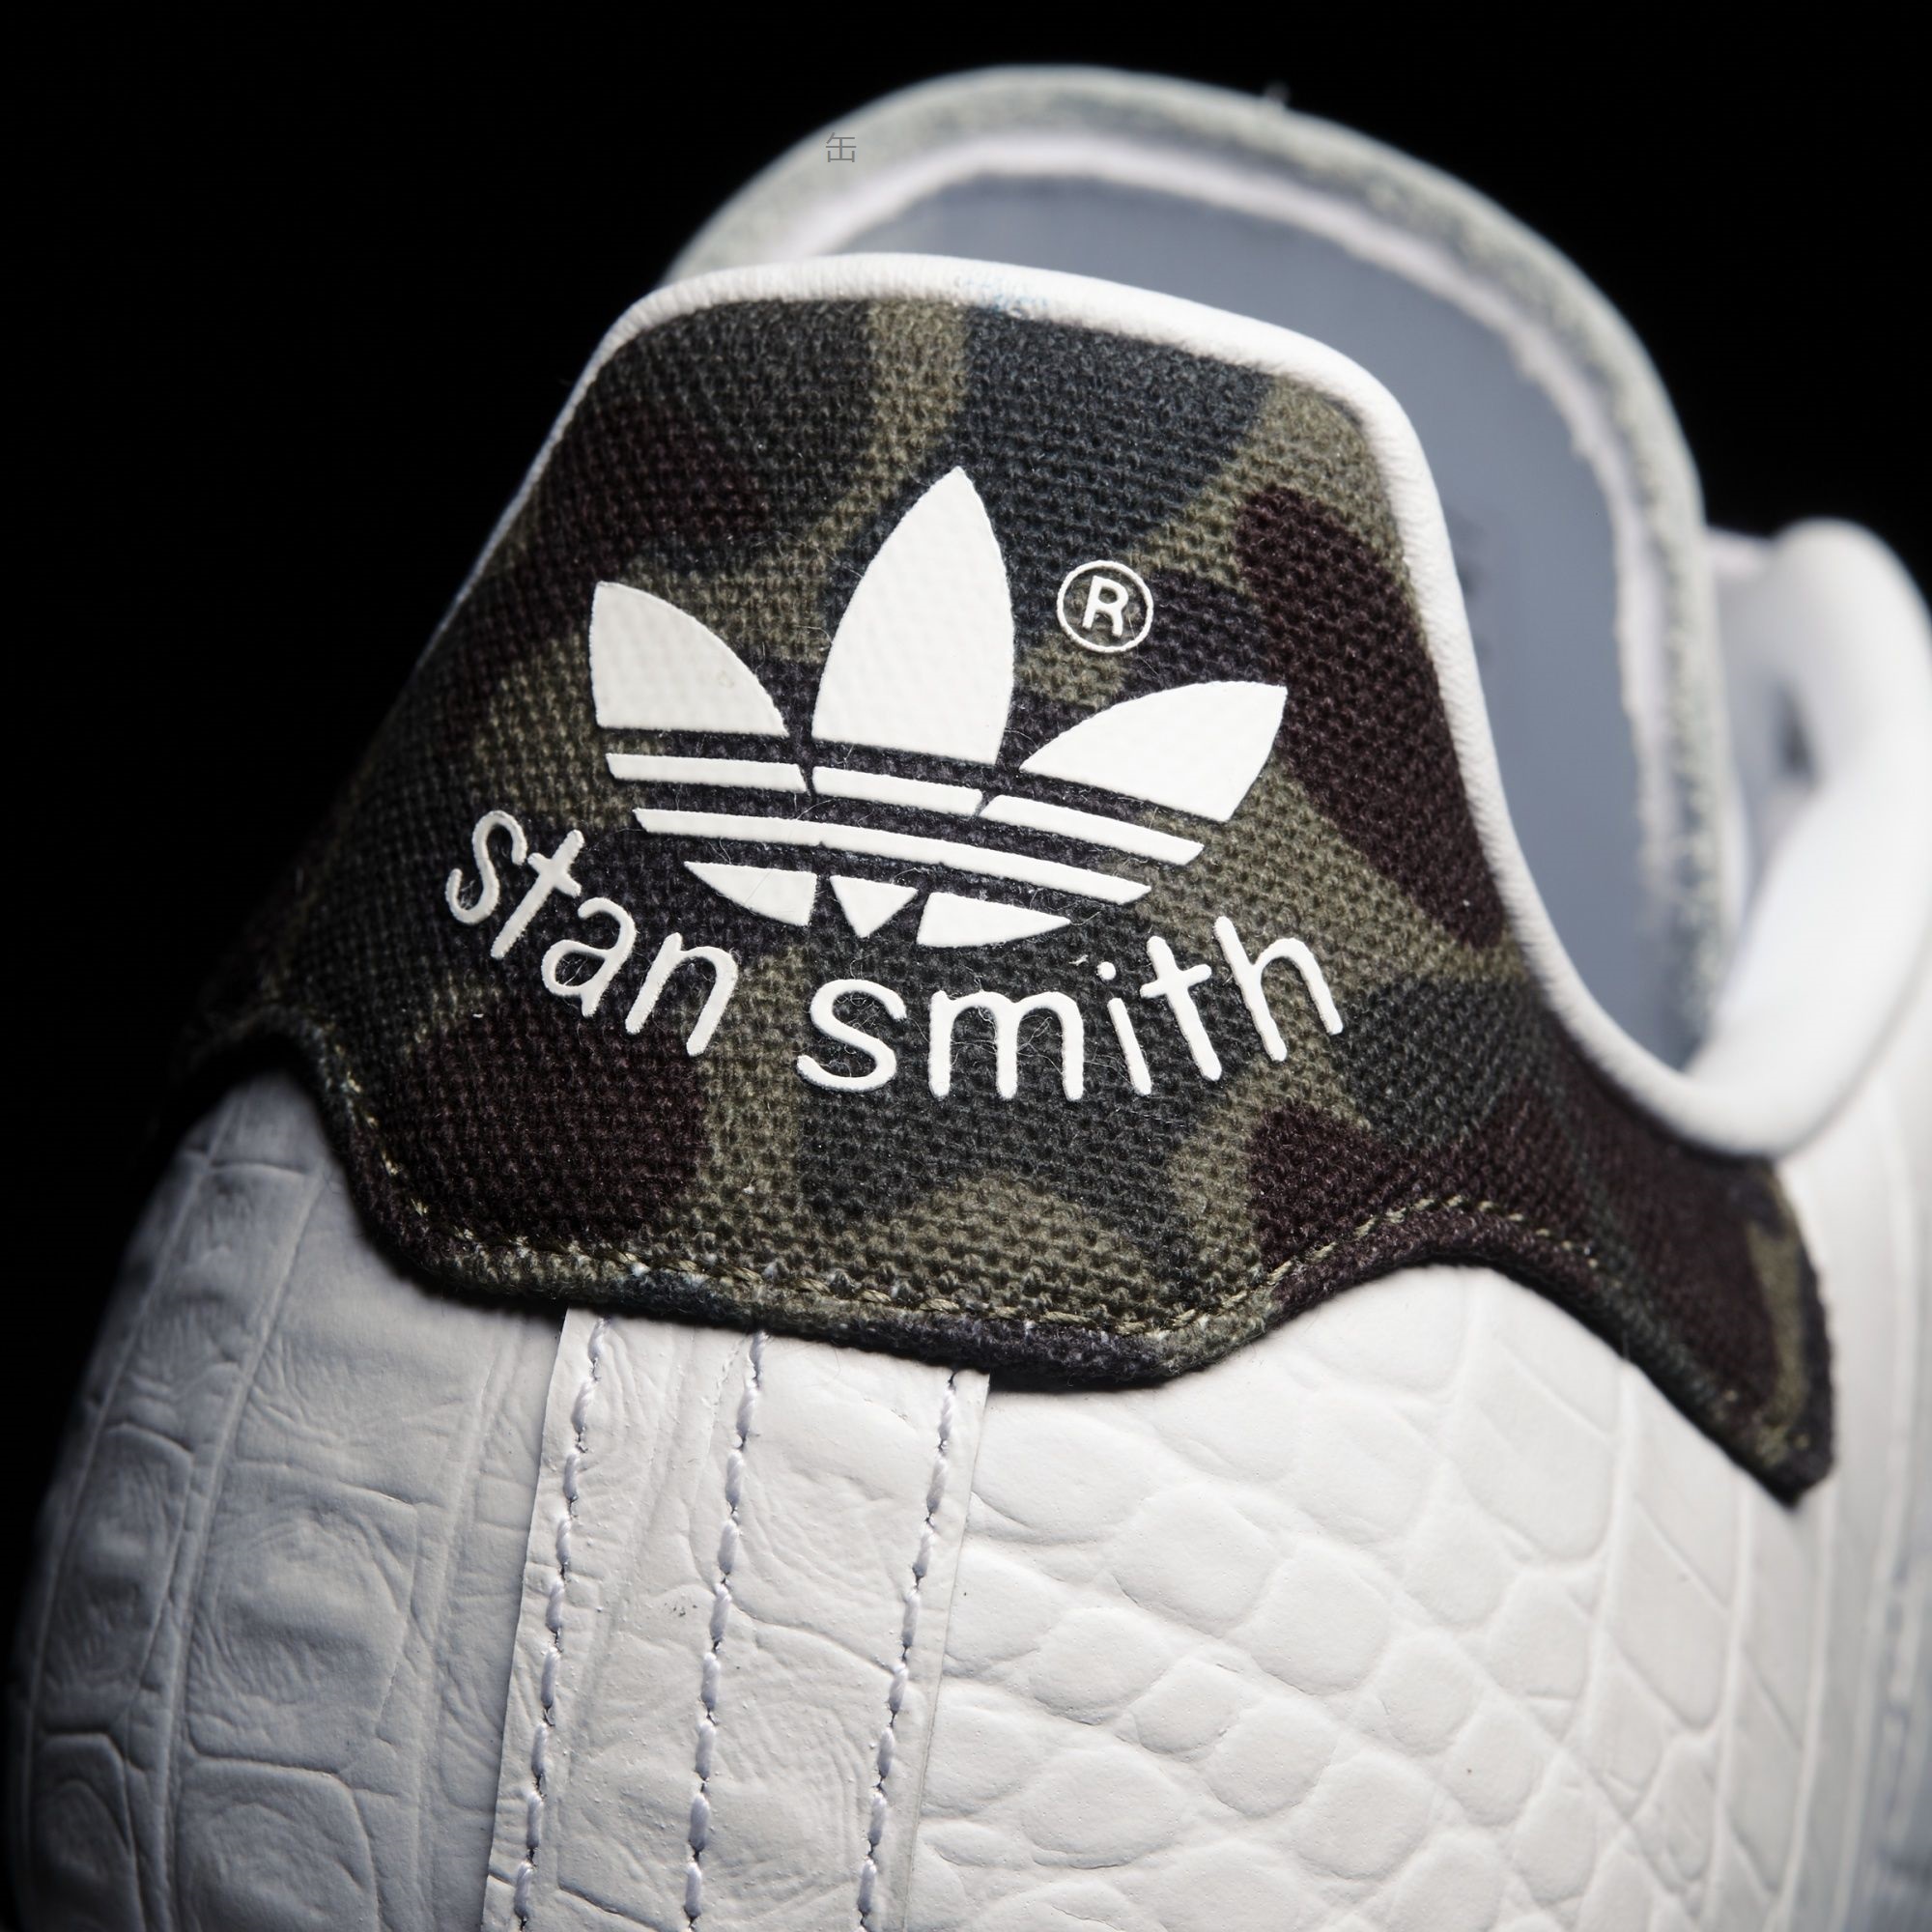 Adidas Originals Stan Smith Croc - Heel